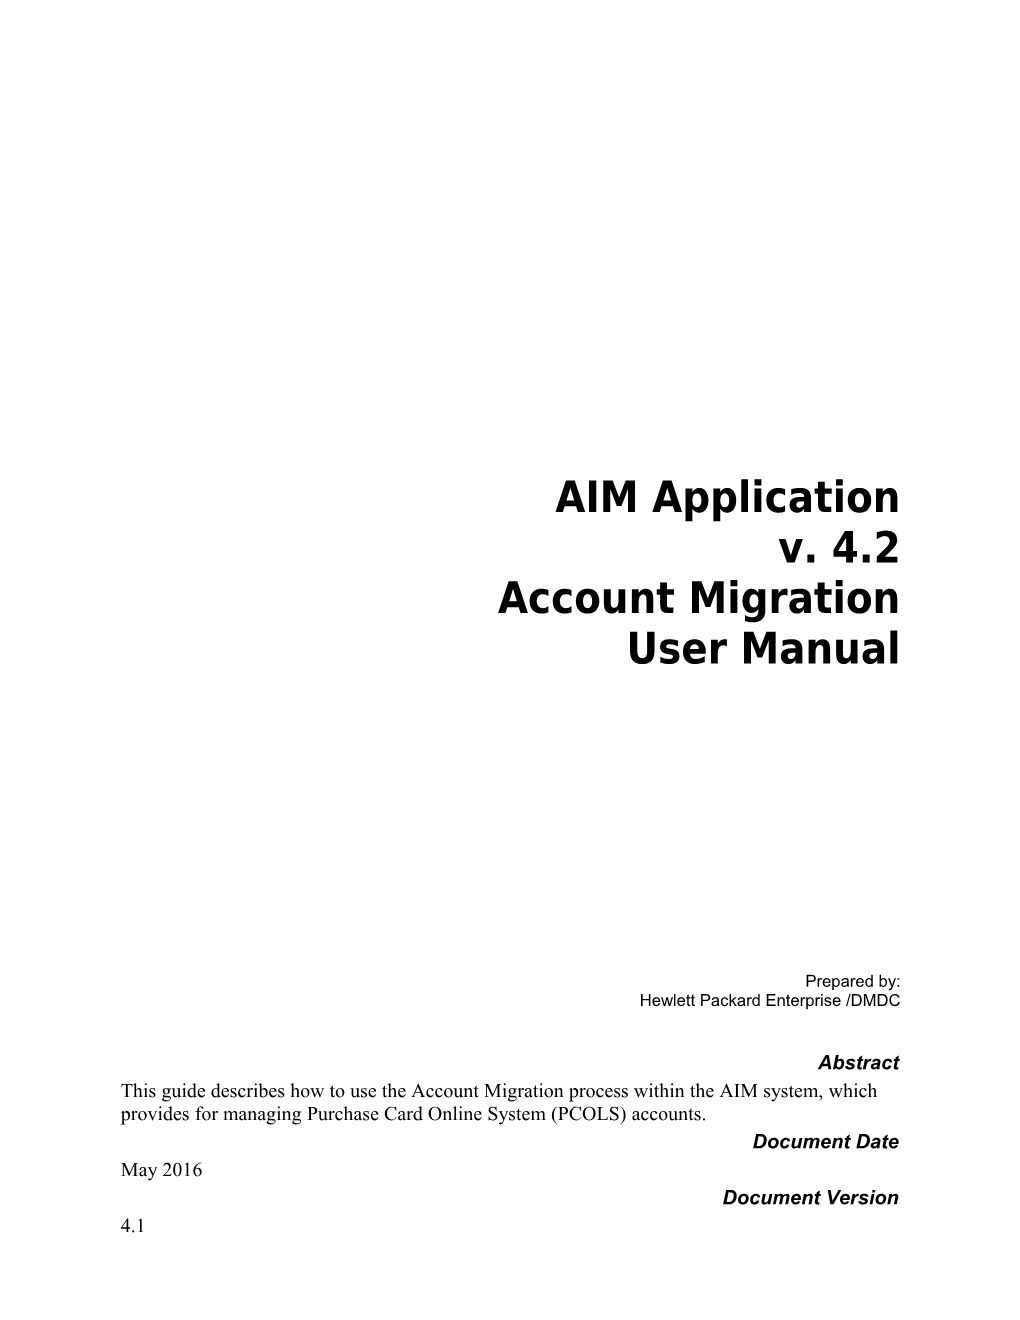 AIM 4.2 Account Migration User Manual